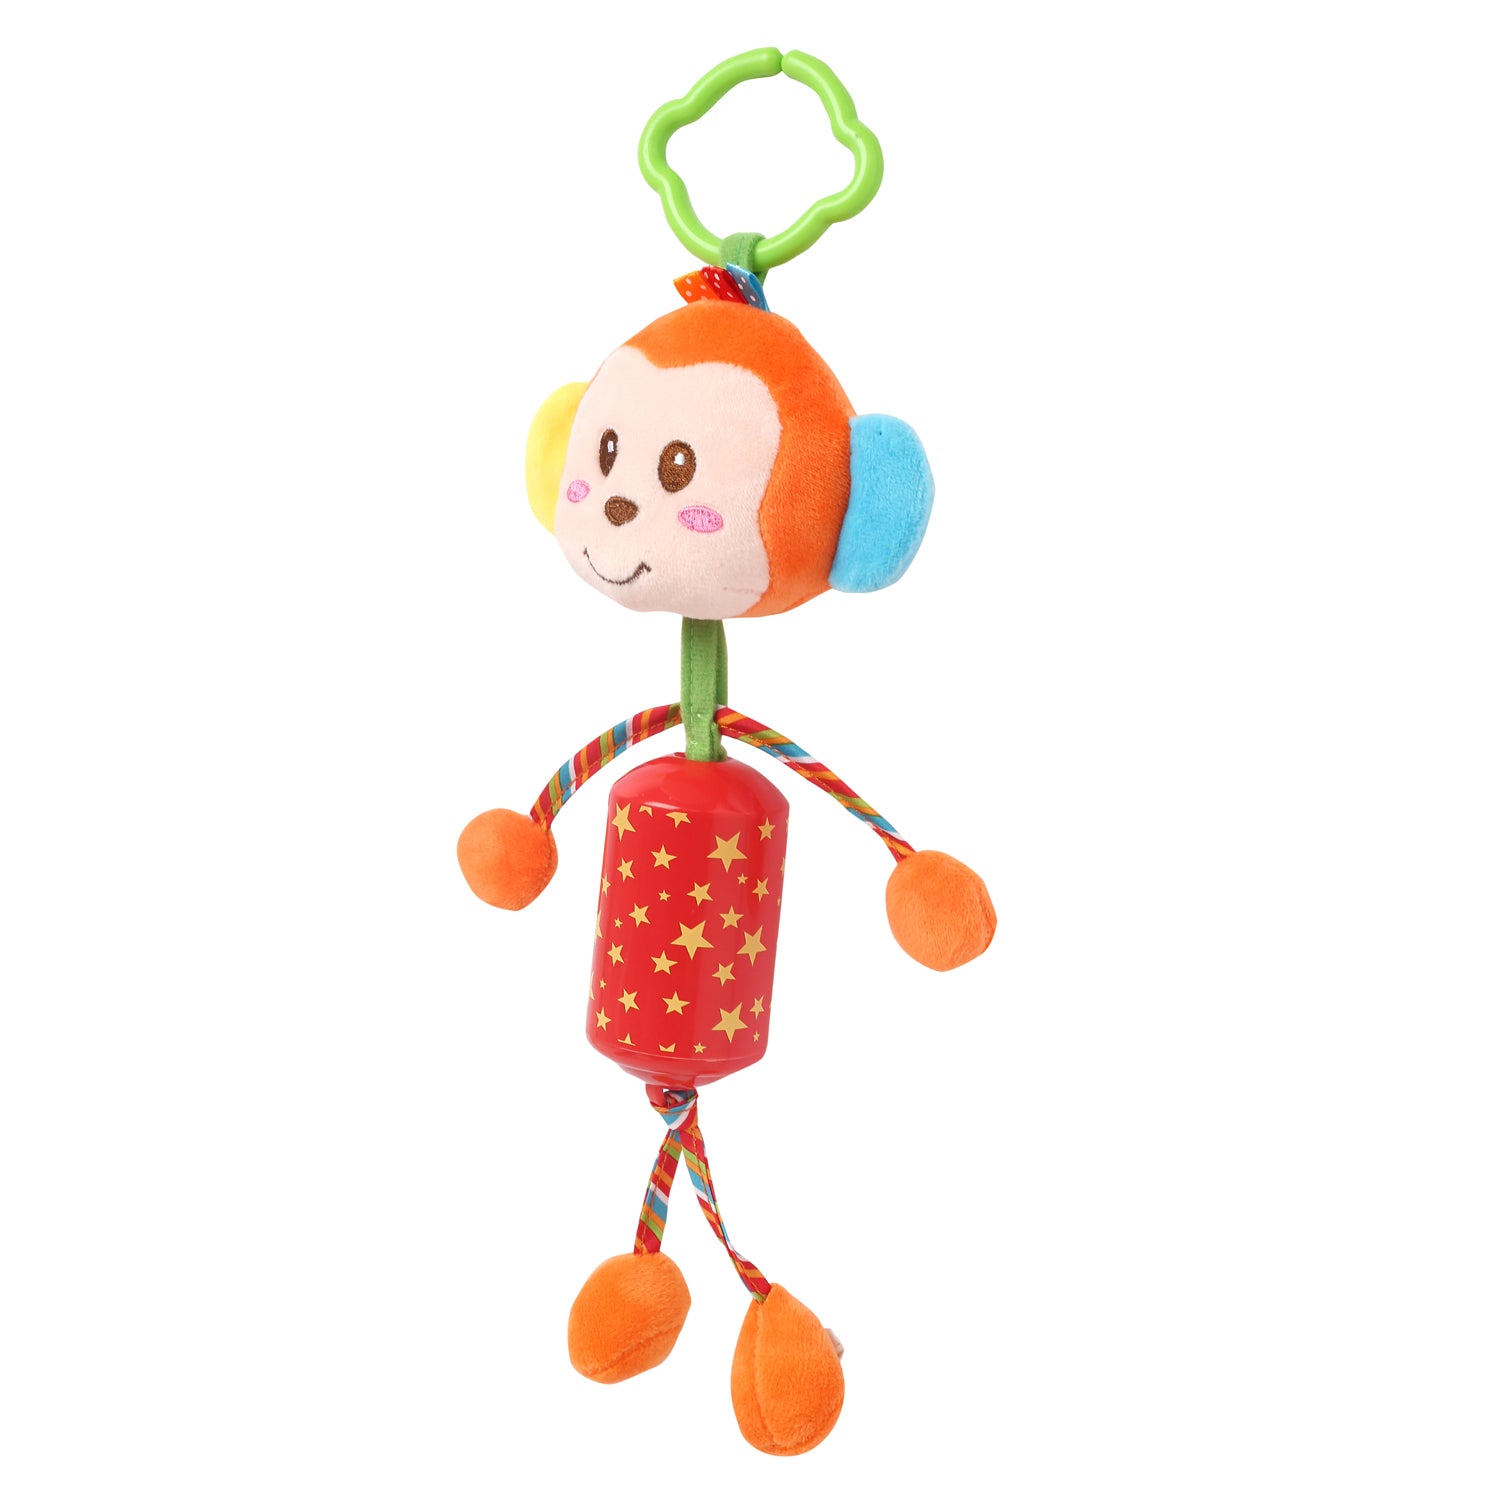 Monkey Orange Hanging Musical Toy / Wind Chime Soft Rattle